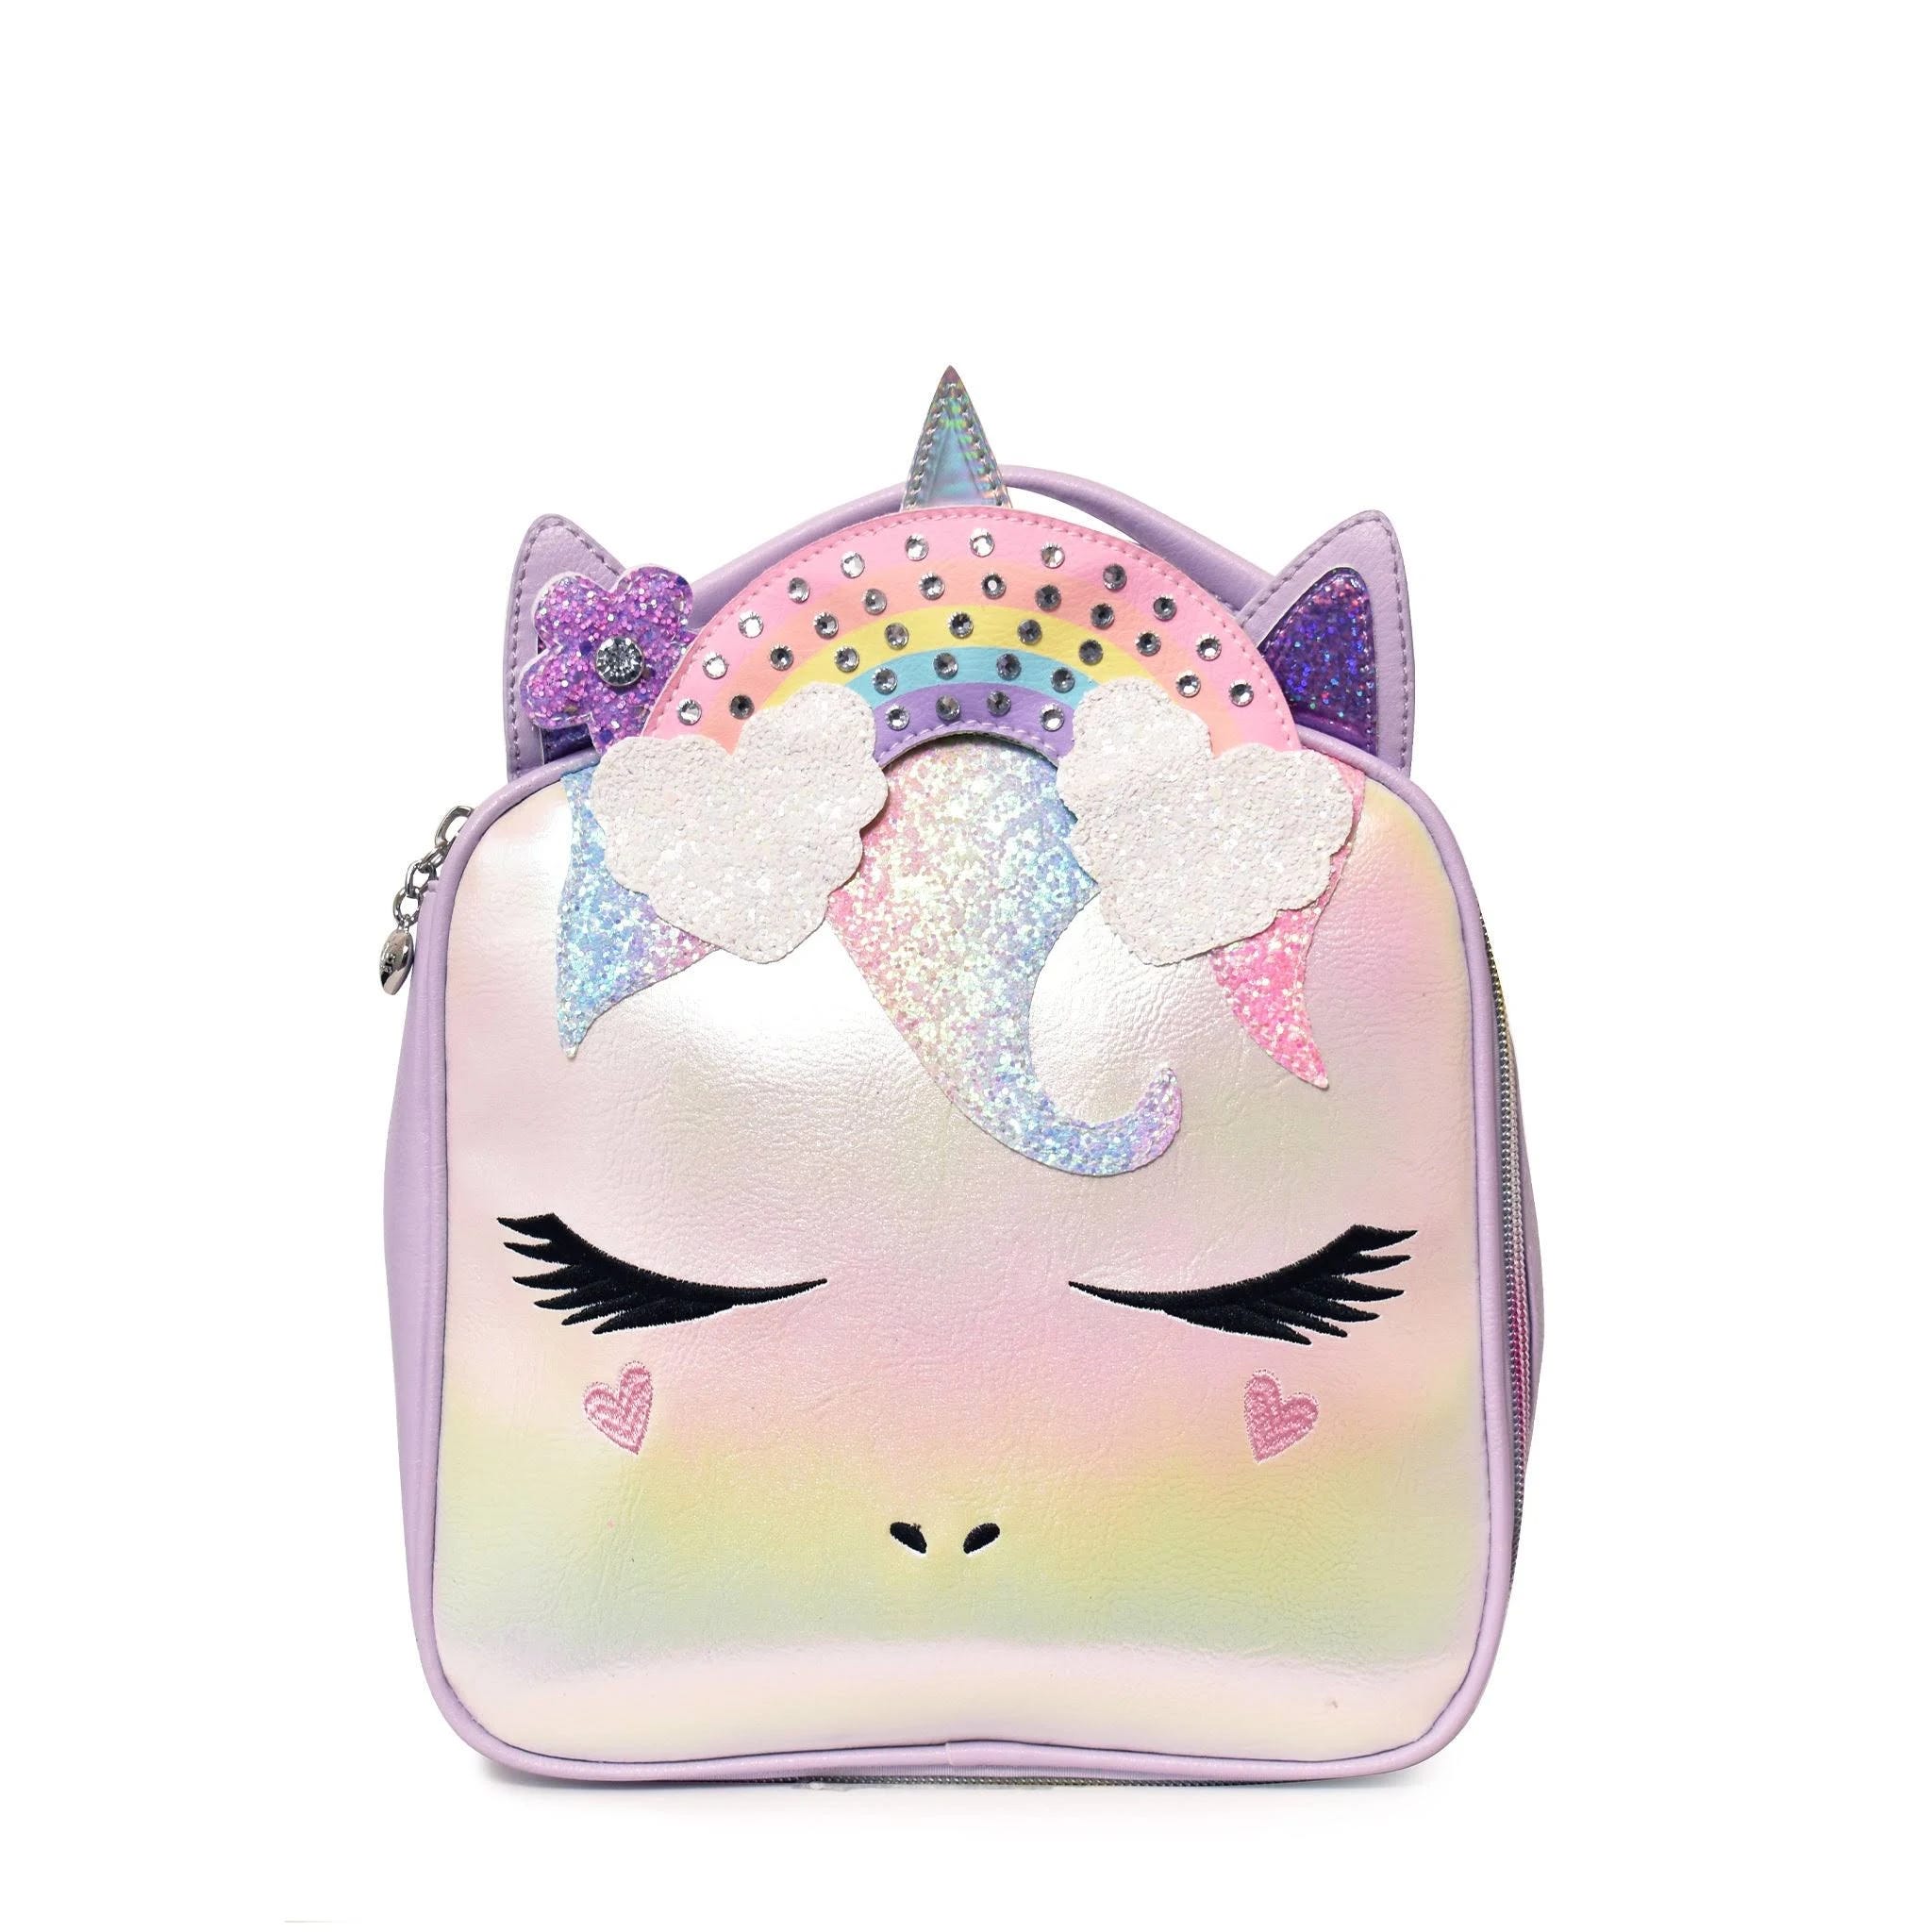 Iridescent Rainbow Unicorn Lunch Bag | Image